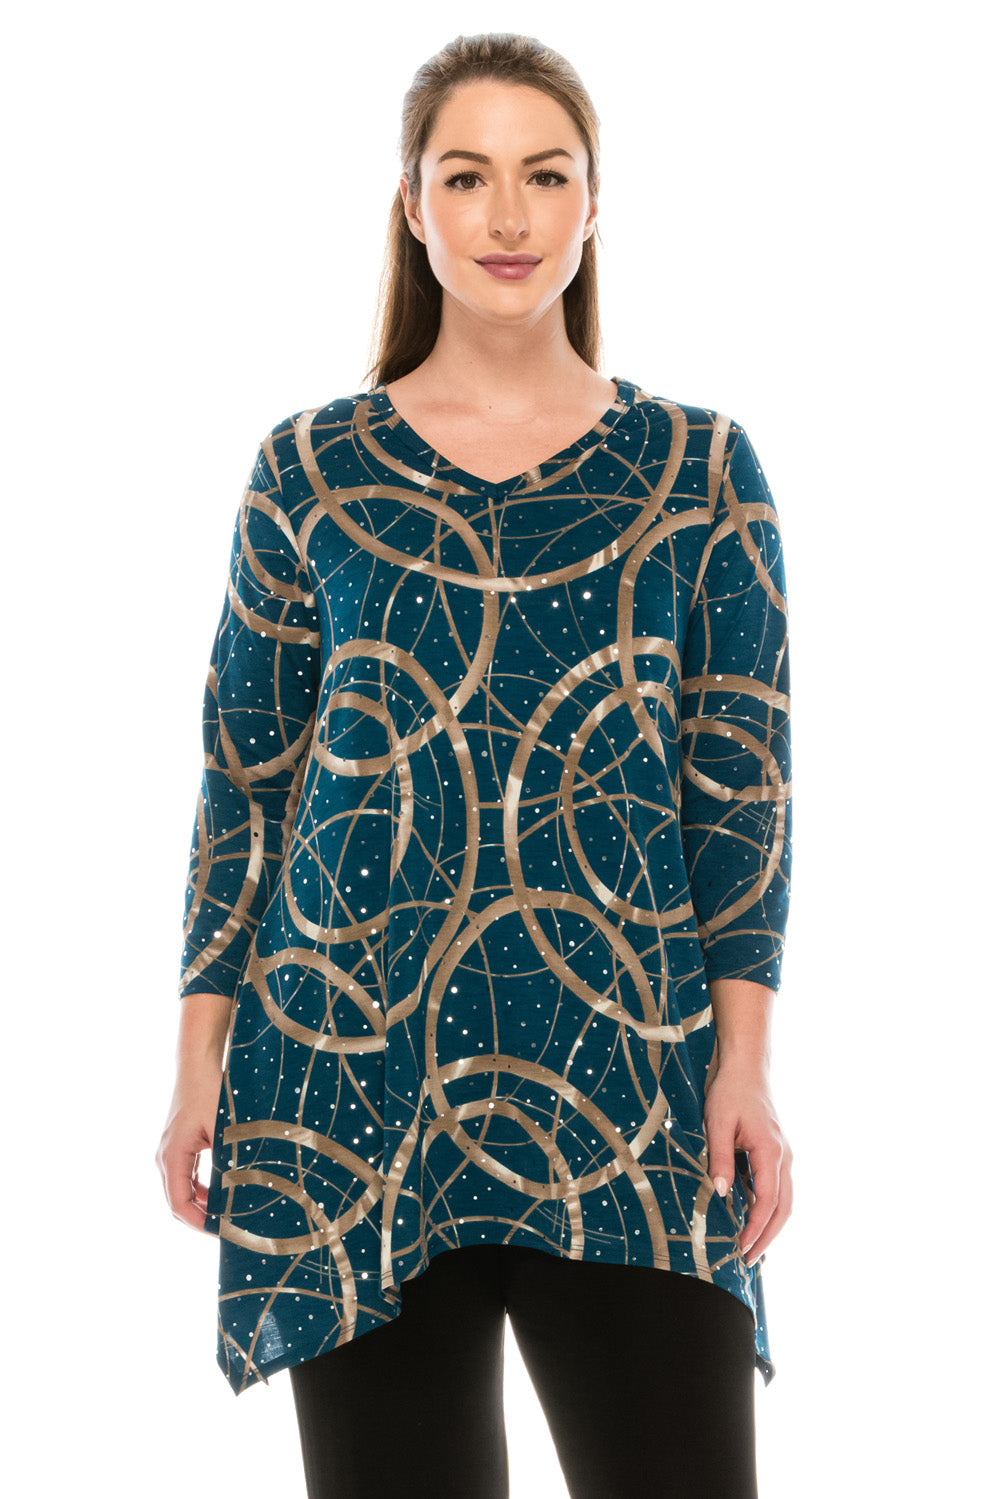 Jostar Women's Glitter V-Neck Binding Top 3/4 Sleeve Print, 313GL-QP-G008 - Jostar Online